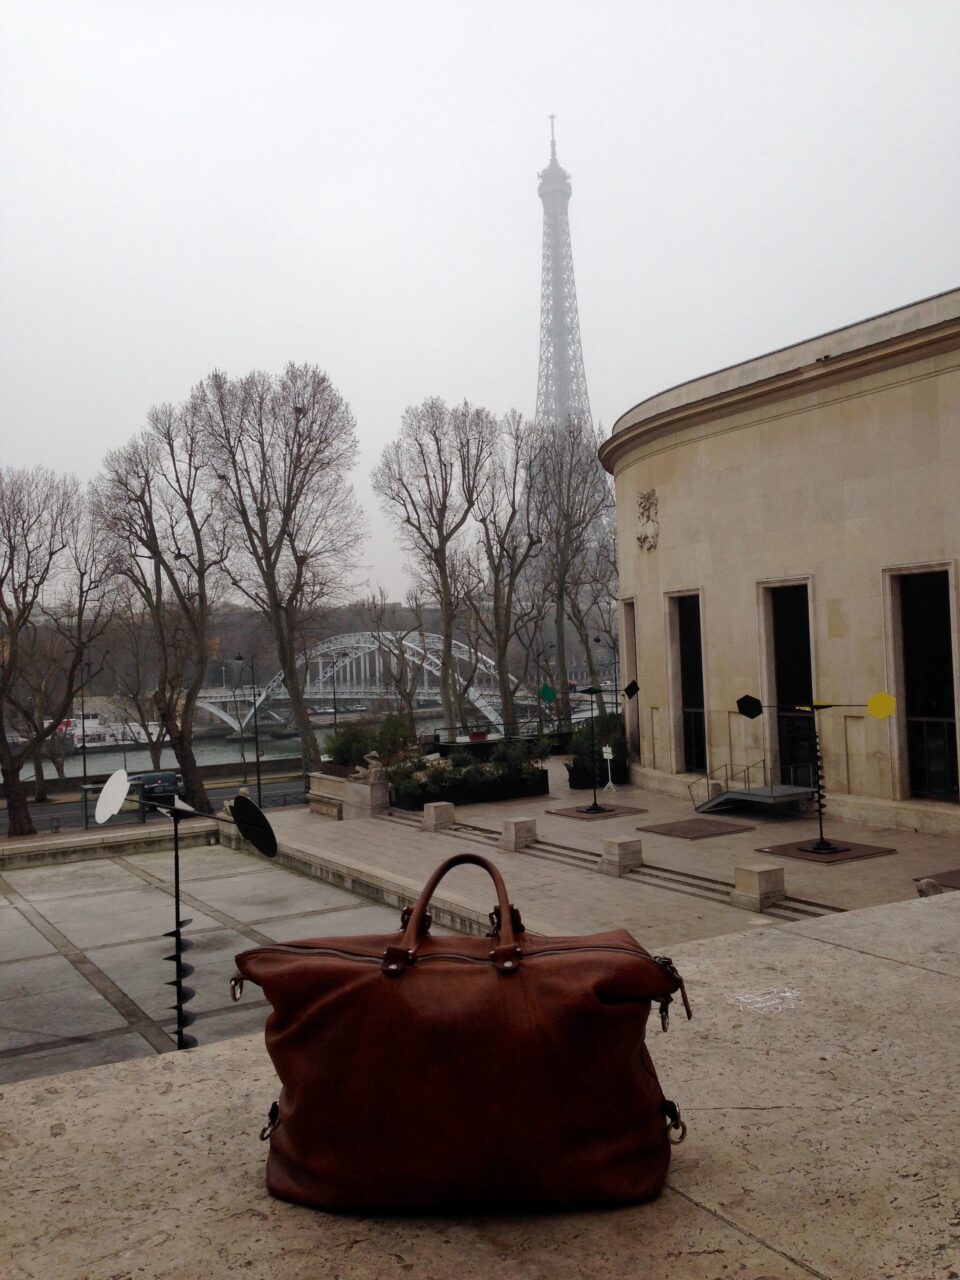 Laundry in foggy Paris